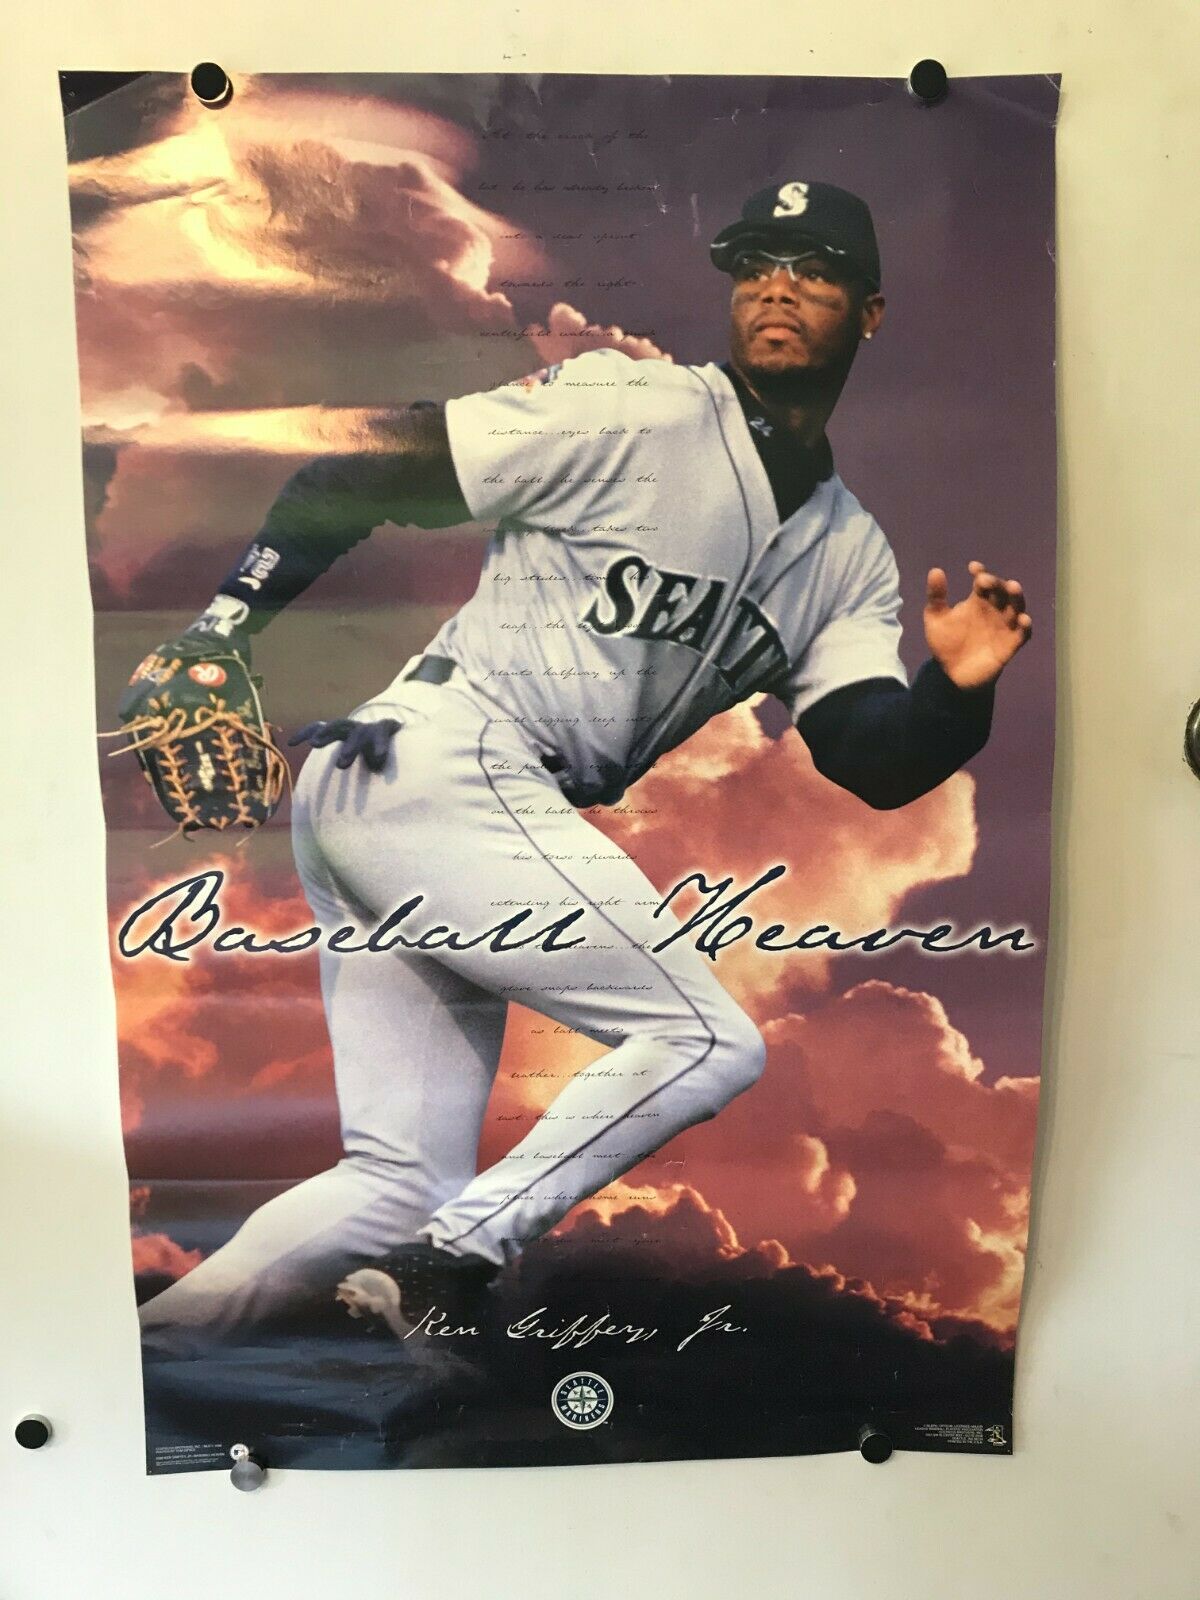 Ken Griffey Jr Baseball Heaven Poster Costacos Brothers 1998 #6280 23" X 34 3/4"